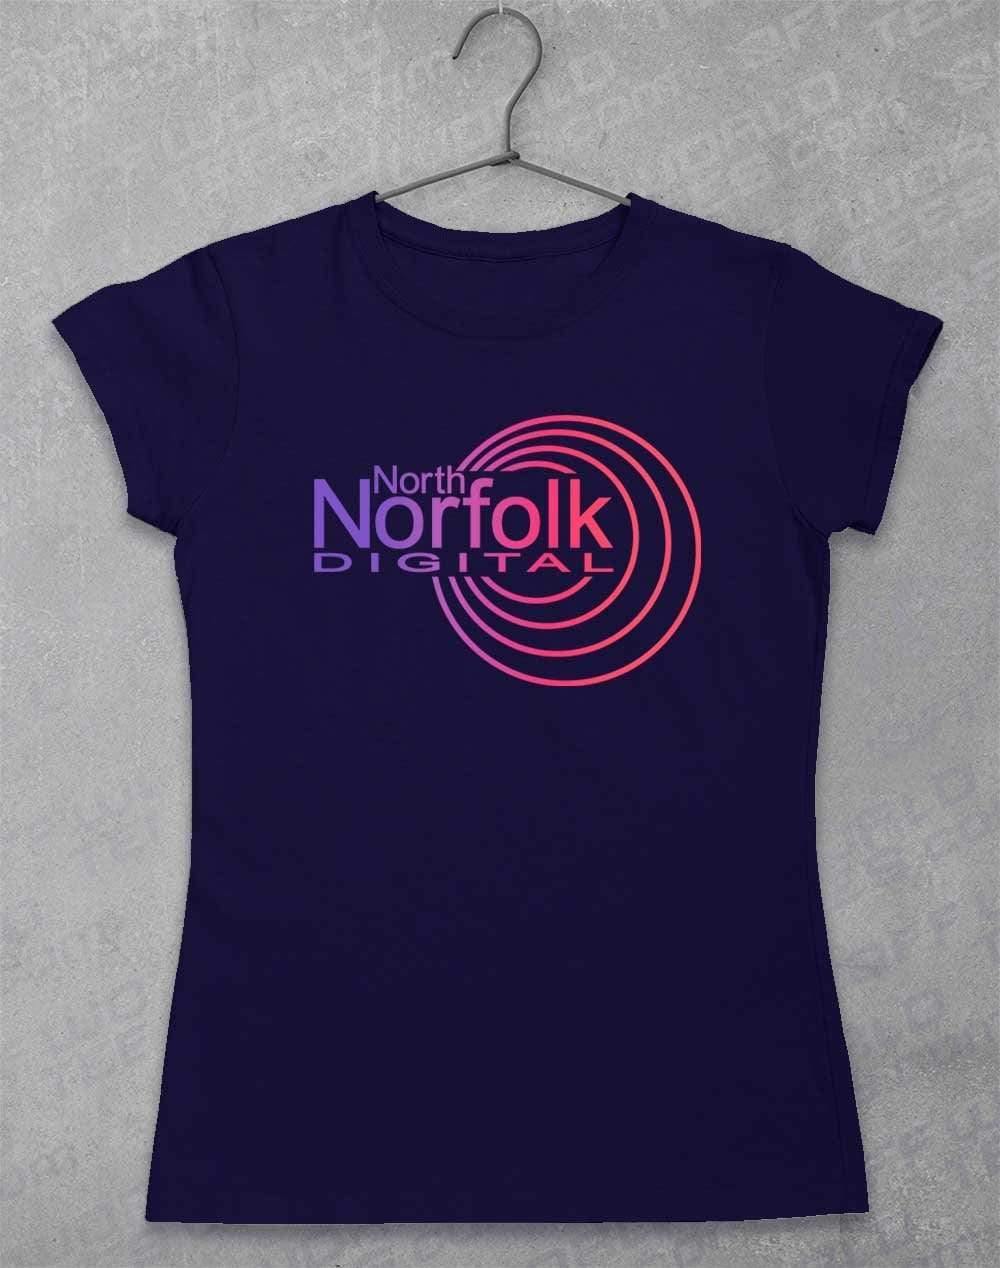 North Norfolk Digital Womens T-Shirt 8-10 / Navy  - Off World Tees